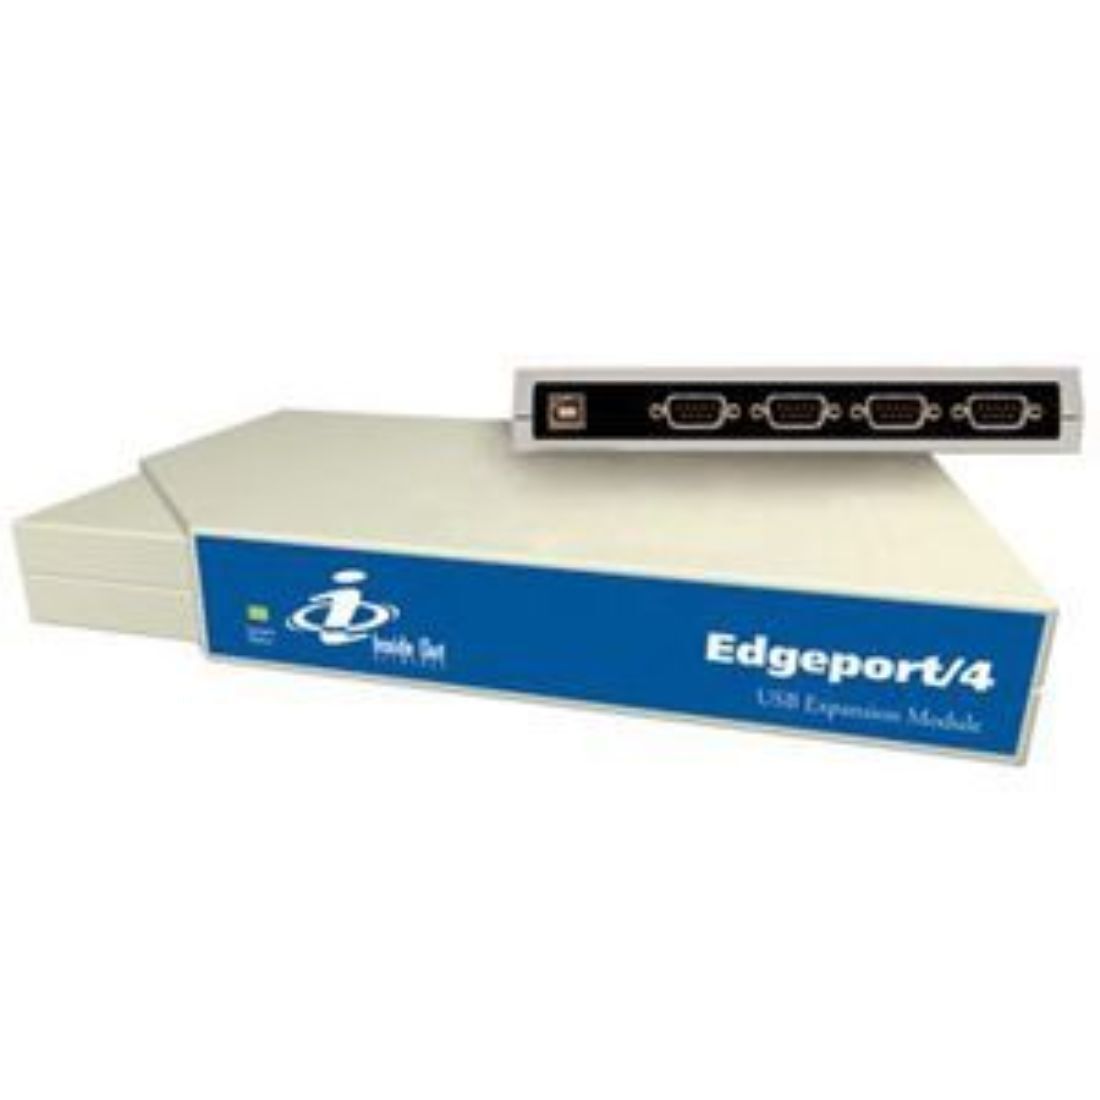 Digi Edgeport 1i 1-Port Serial Adapter 301100131